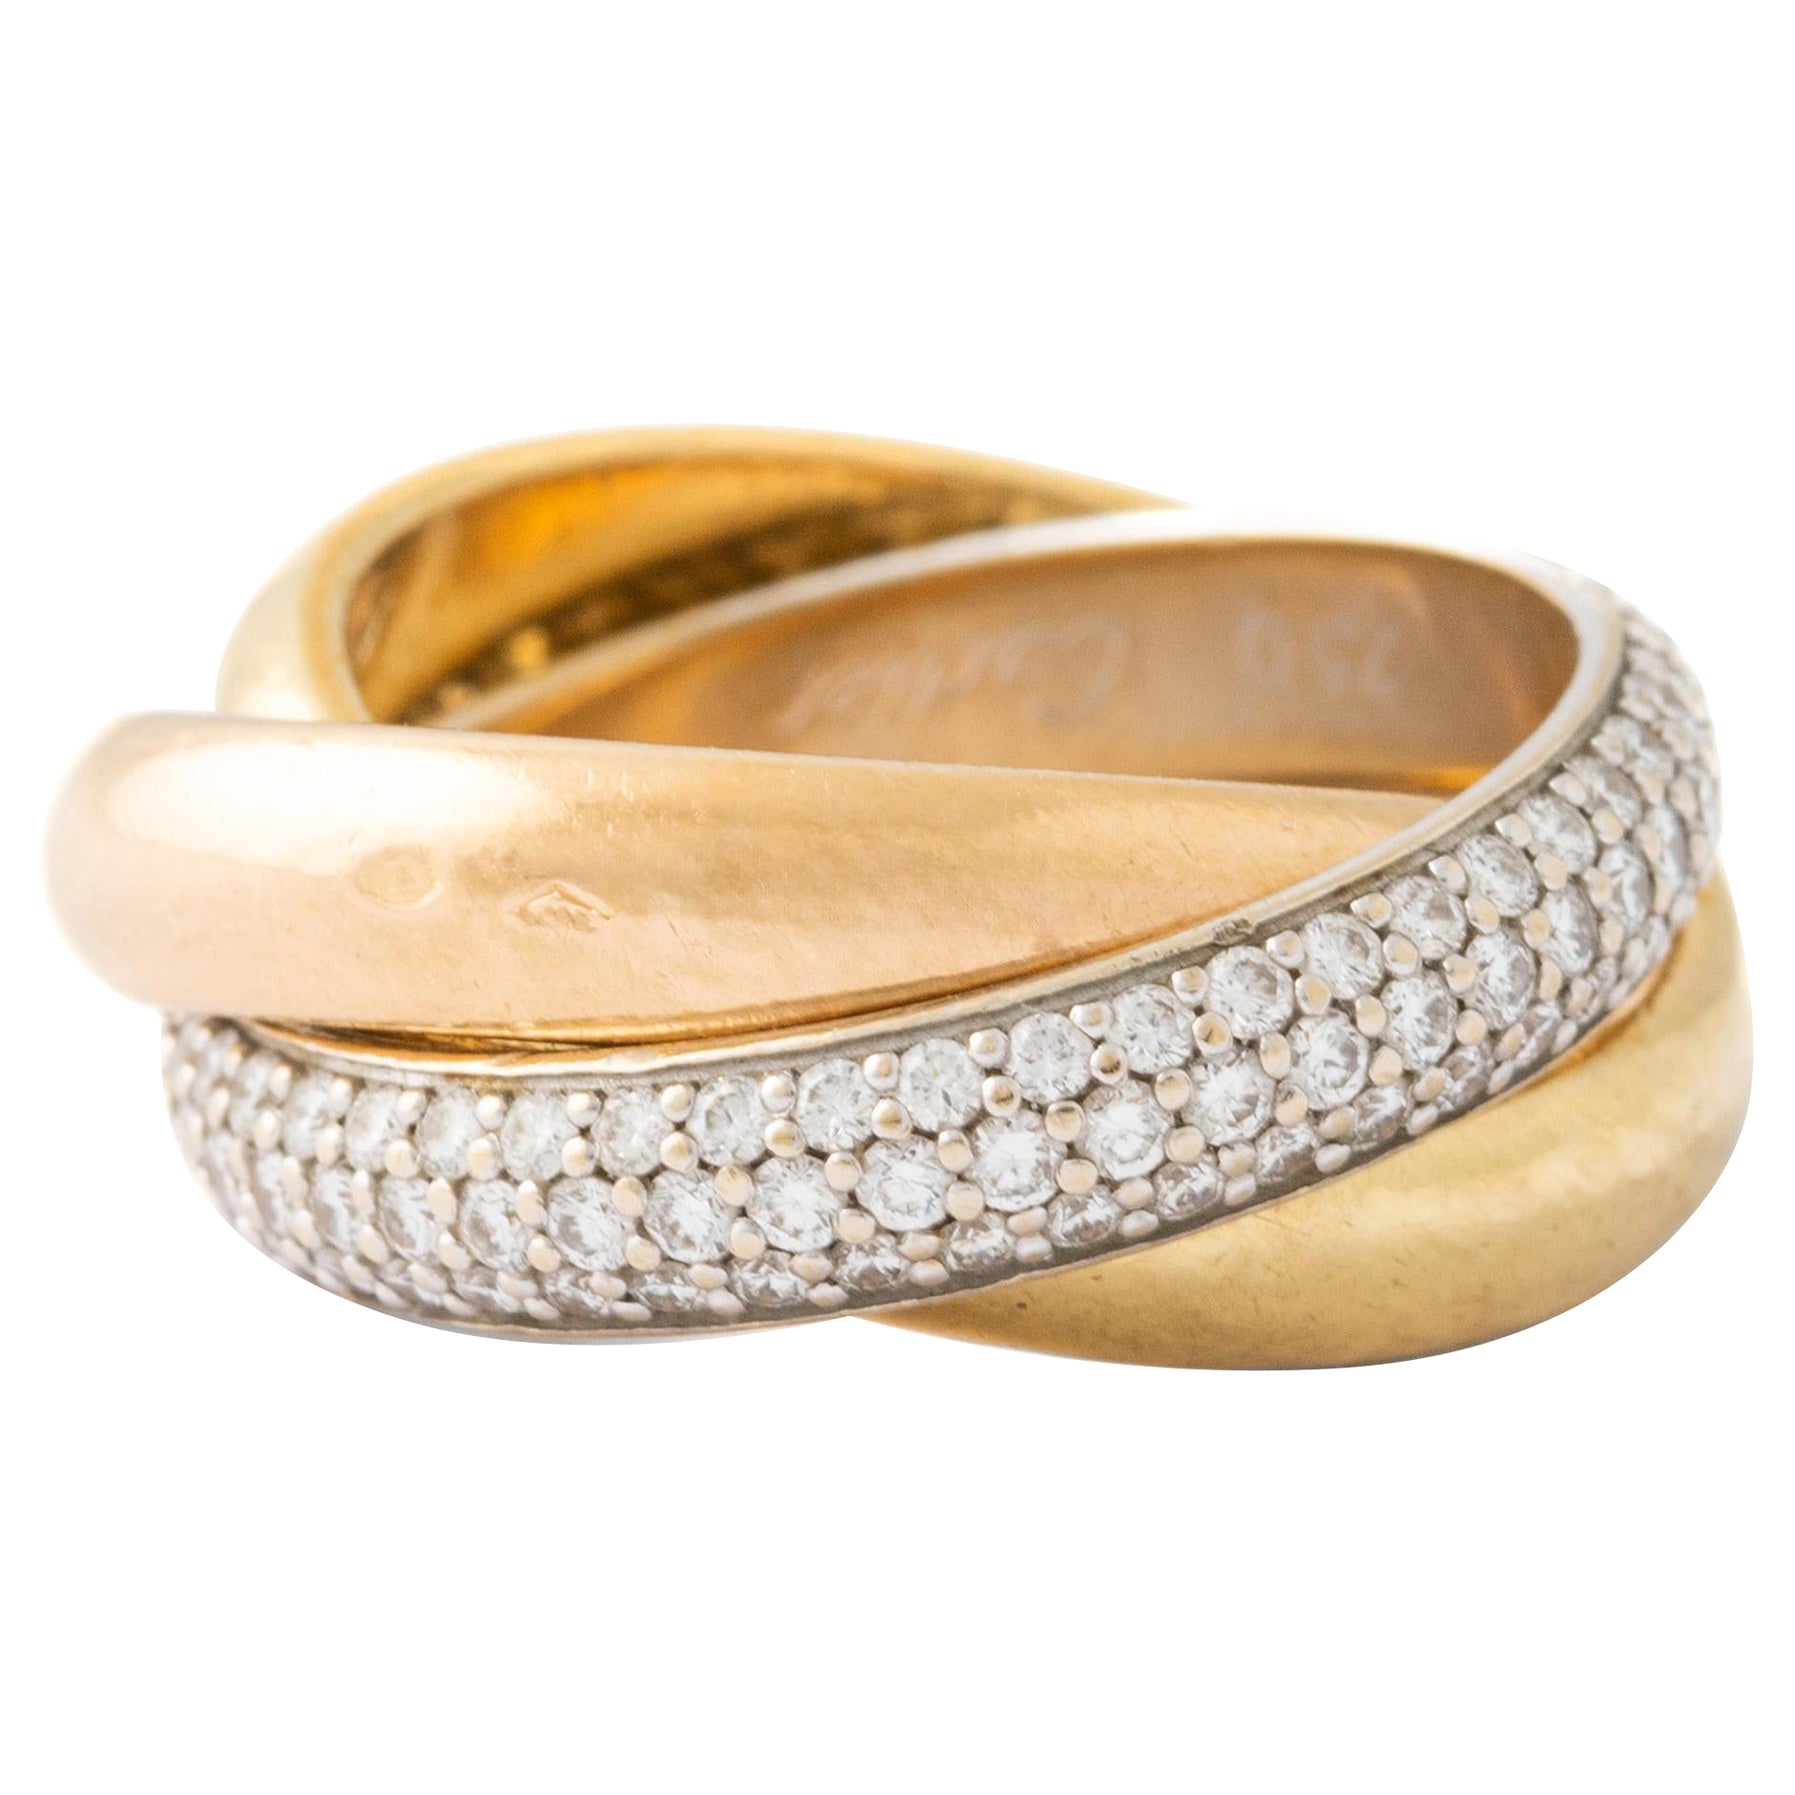 Cartier, bague Trinity vintage en or 18 carats avec diamants